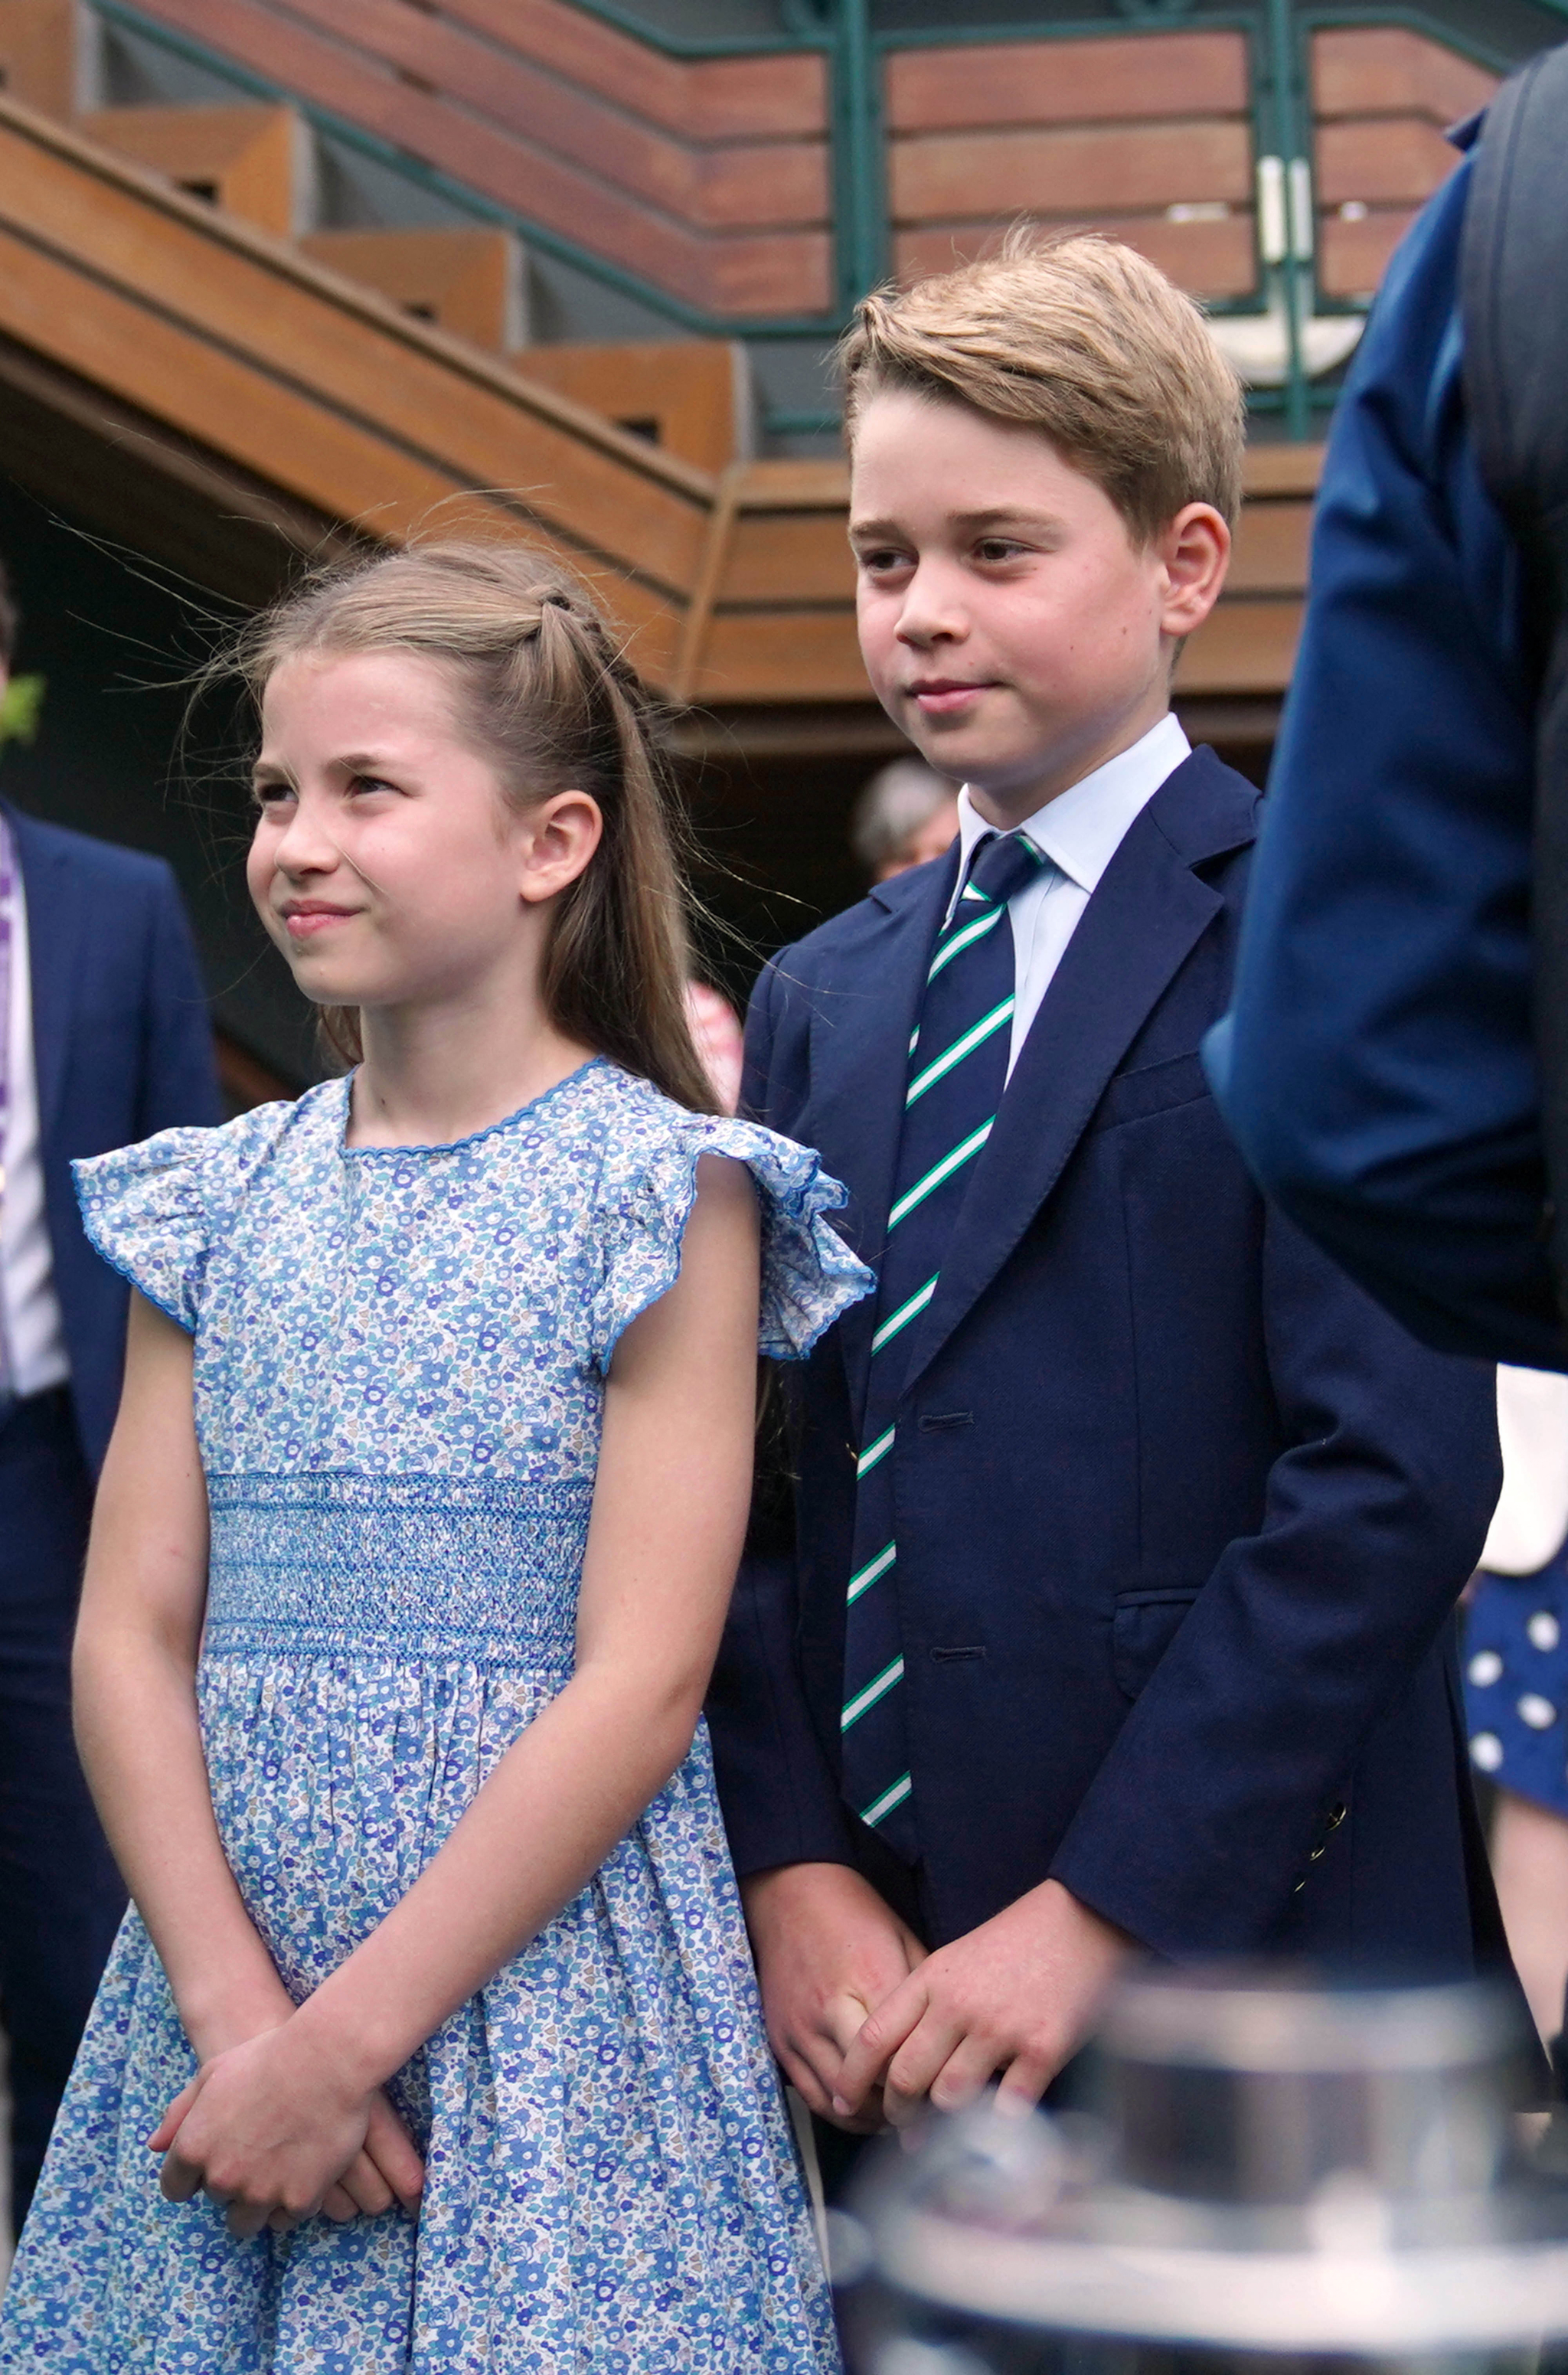 La princesa Charlotte, junto a su hermano George, con vestido de firma española Friki.